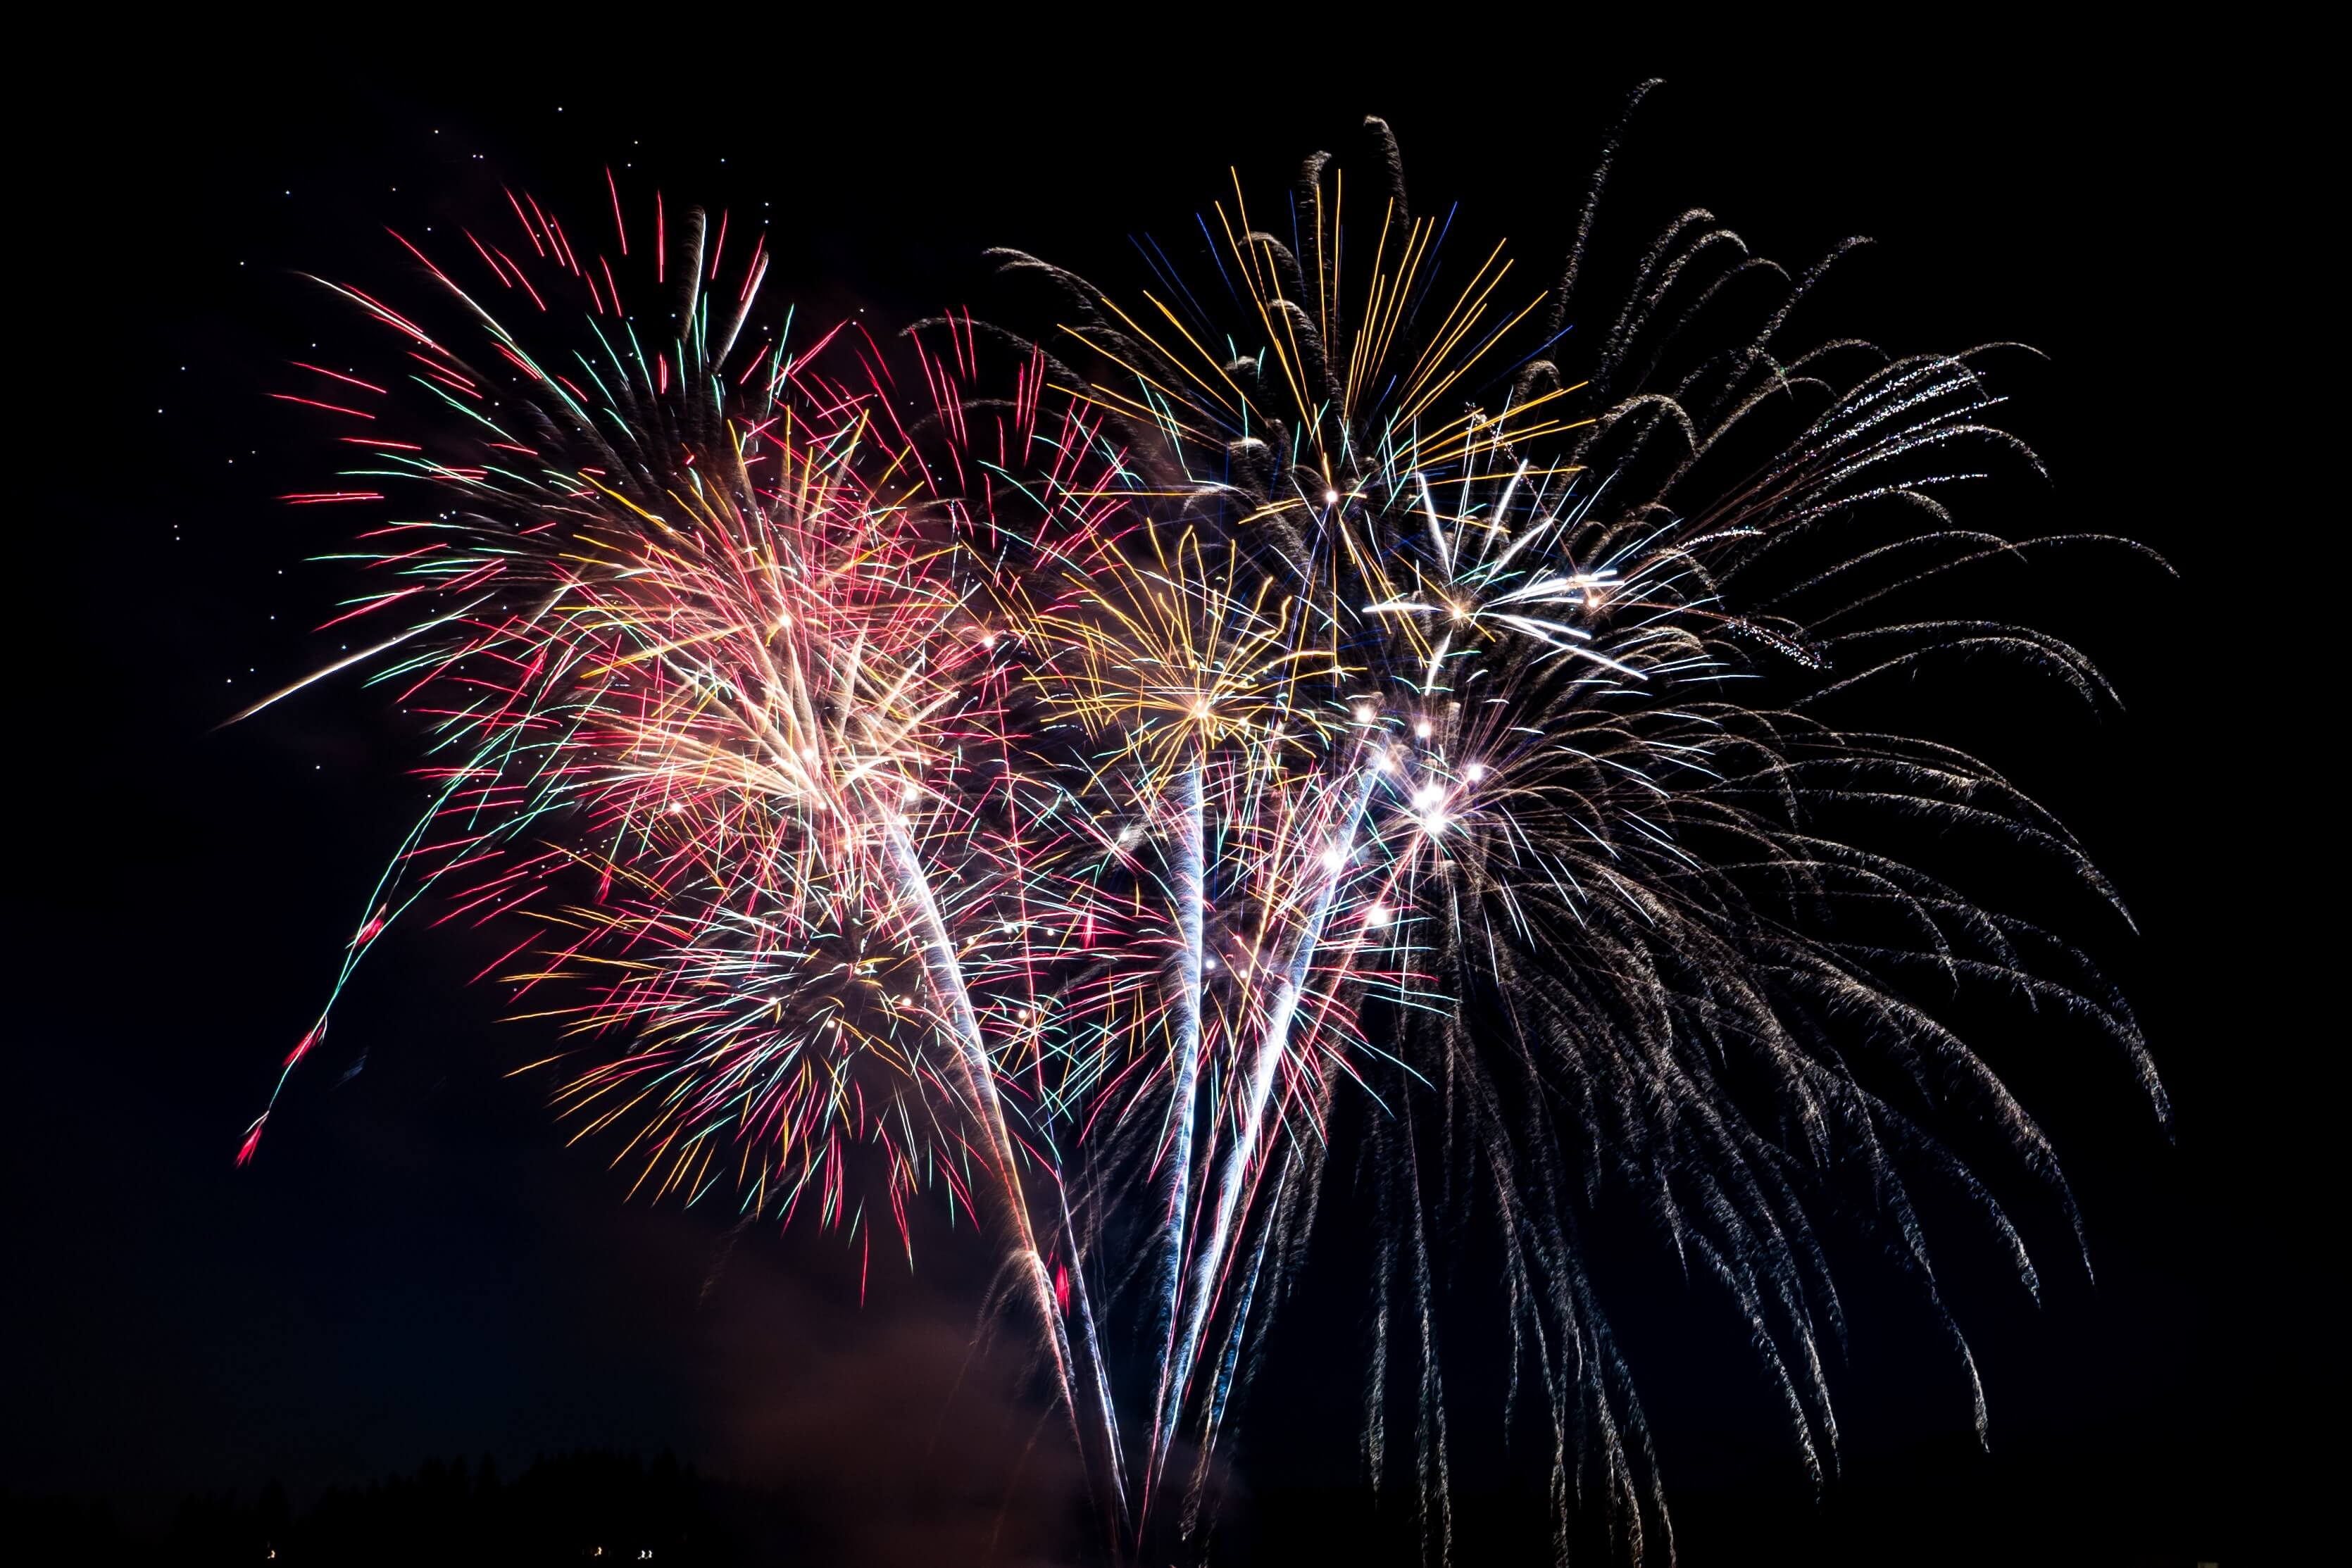 vivid colours of fireworks illuminate the pitch dark night sky